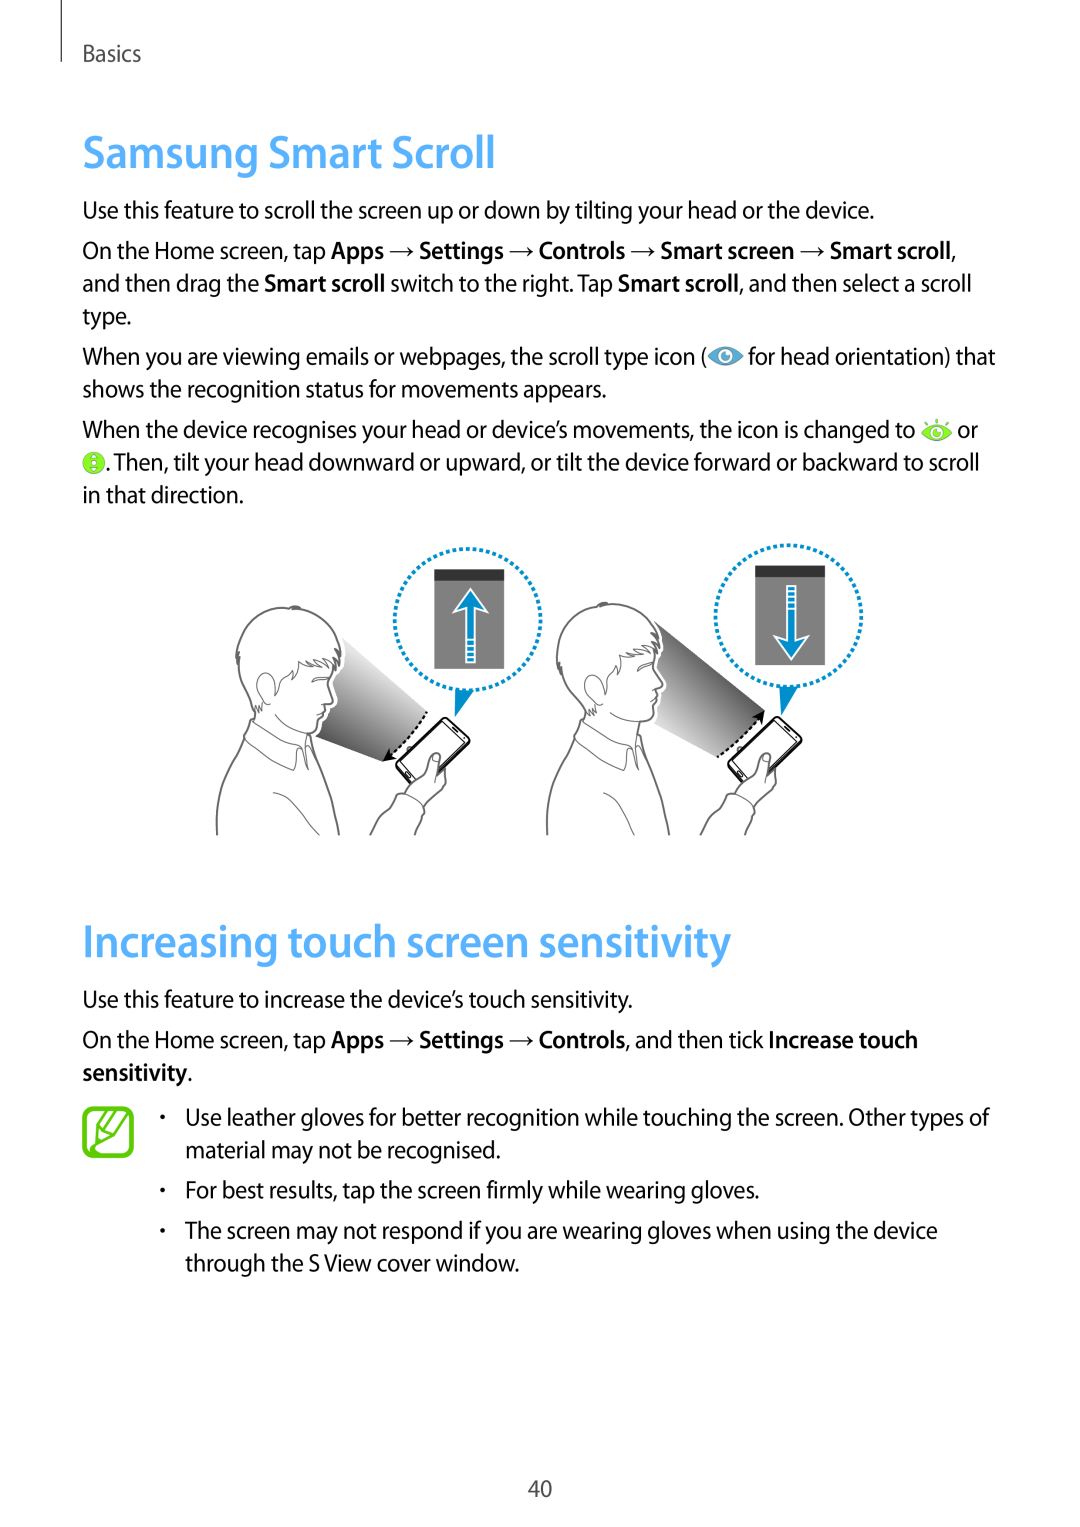 Samsung SM-N9005ZKEAFR, SM-N9005ZKEEGY, SM-N9005ZIEEGY Samsung Smart Scroll, Increasing touch screen sensitivity, Basics 